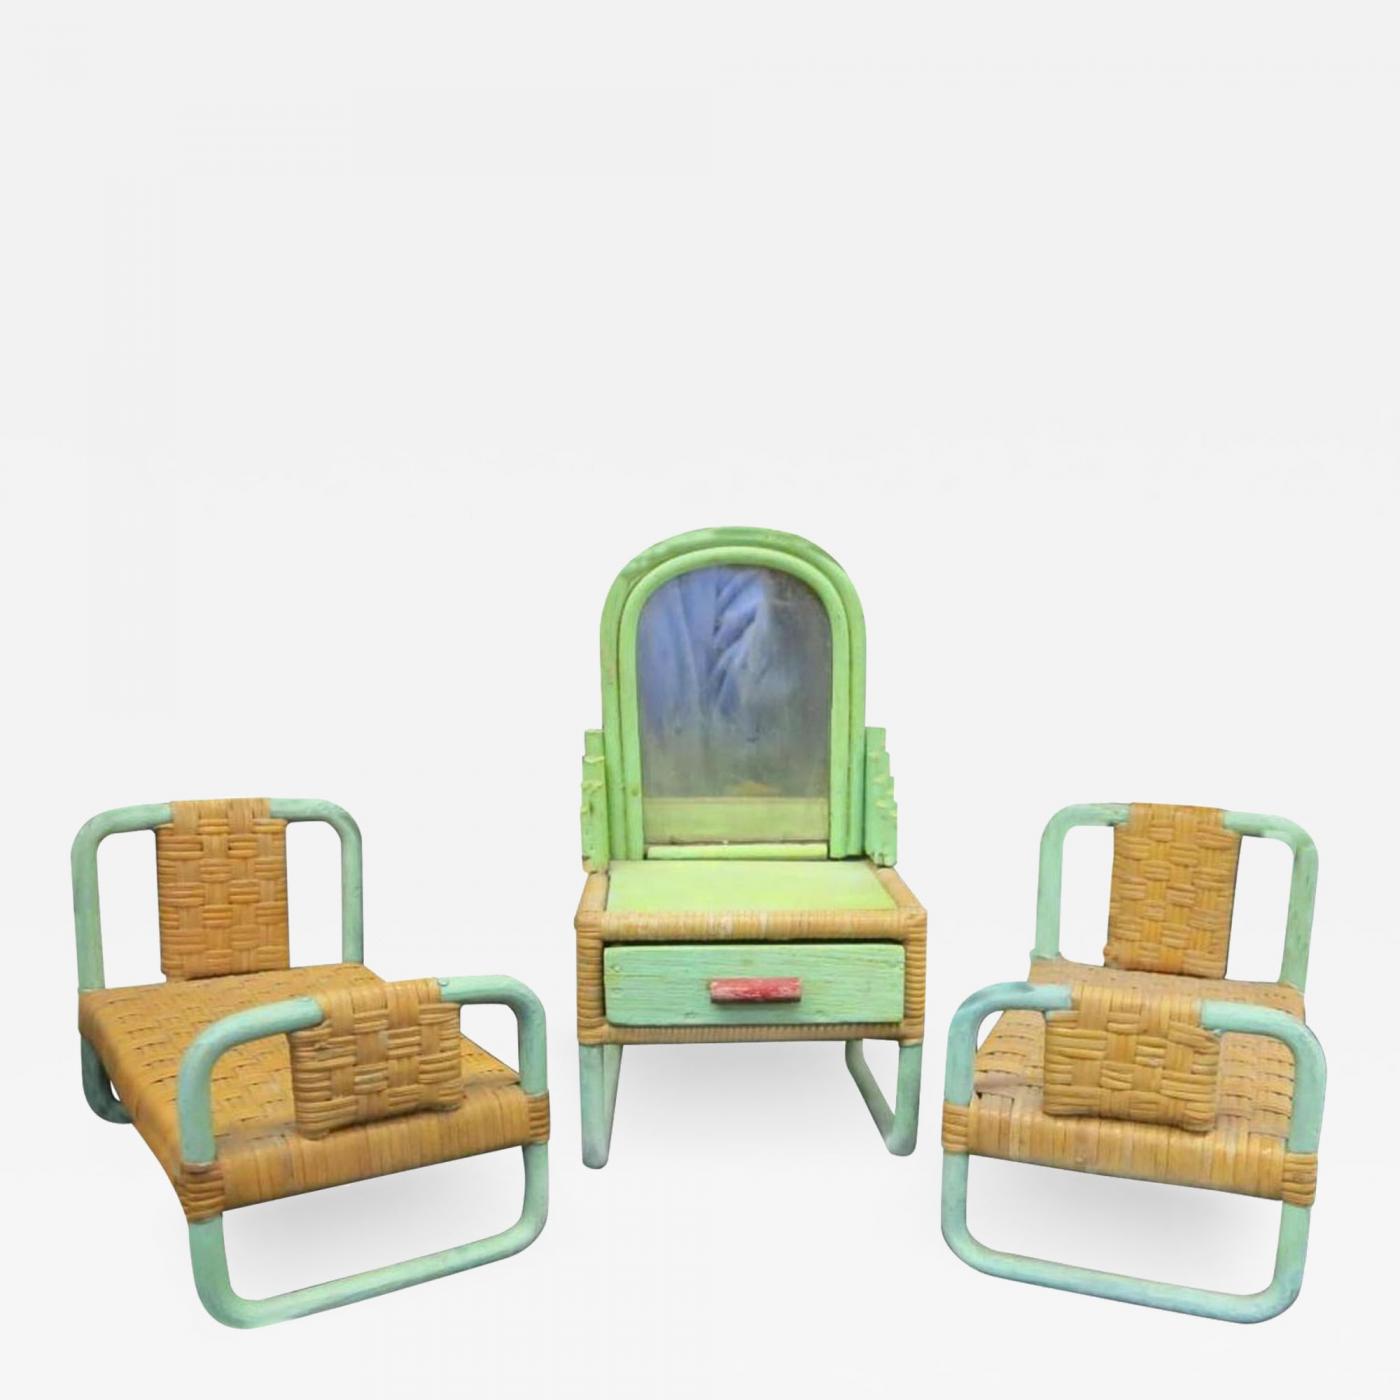 1940s dollhouse furniture